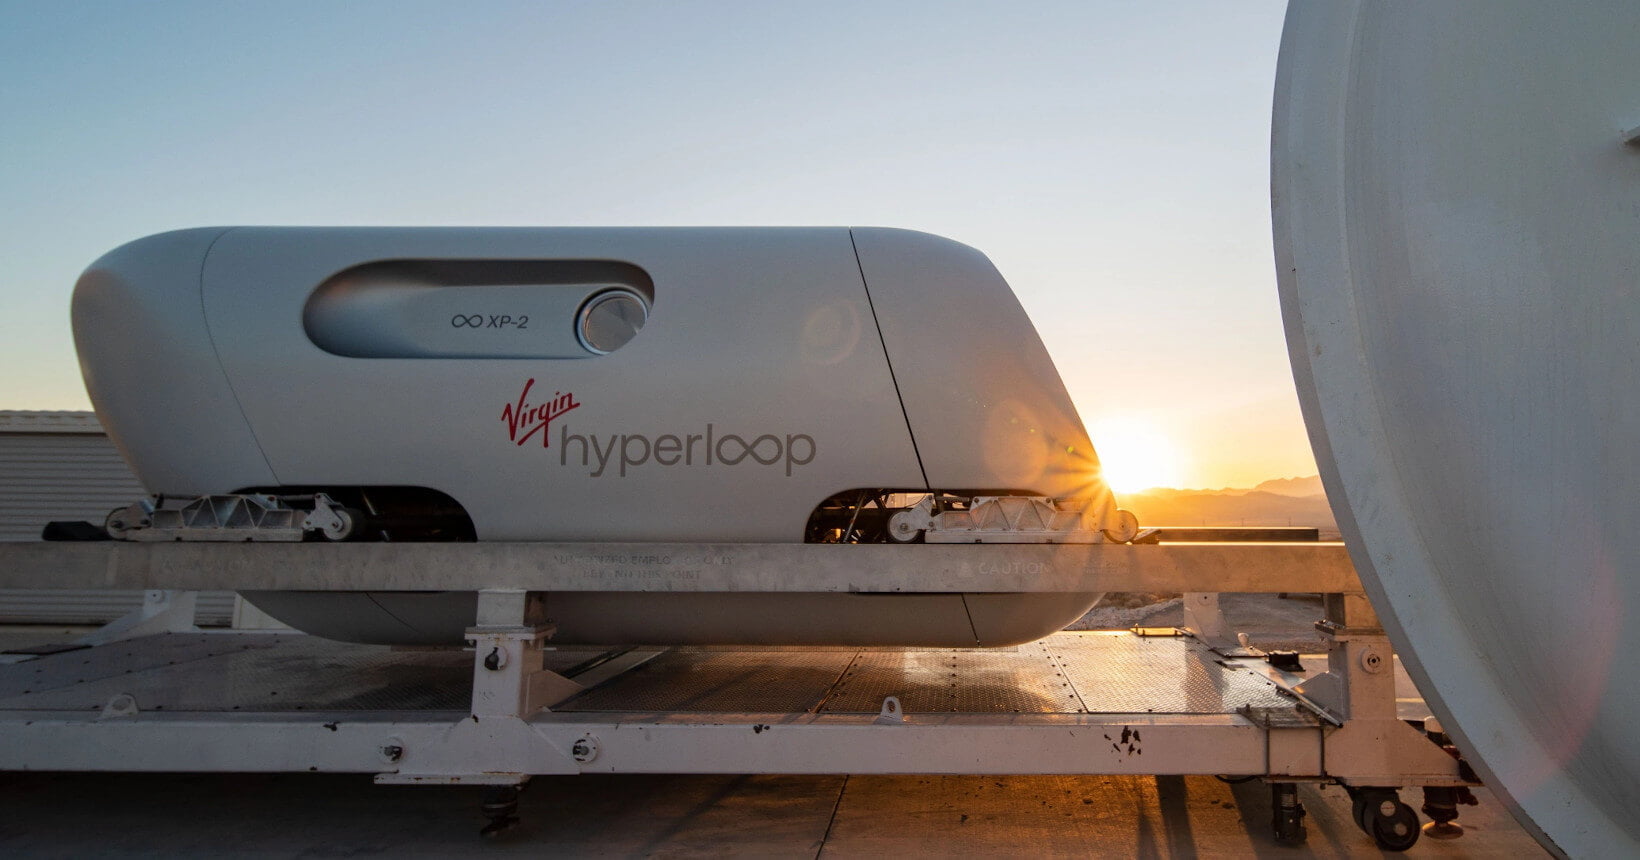 Virgin Hyperloop revela detalhes de seu transporte futurista